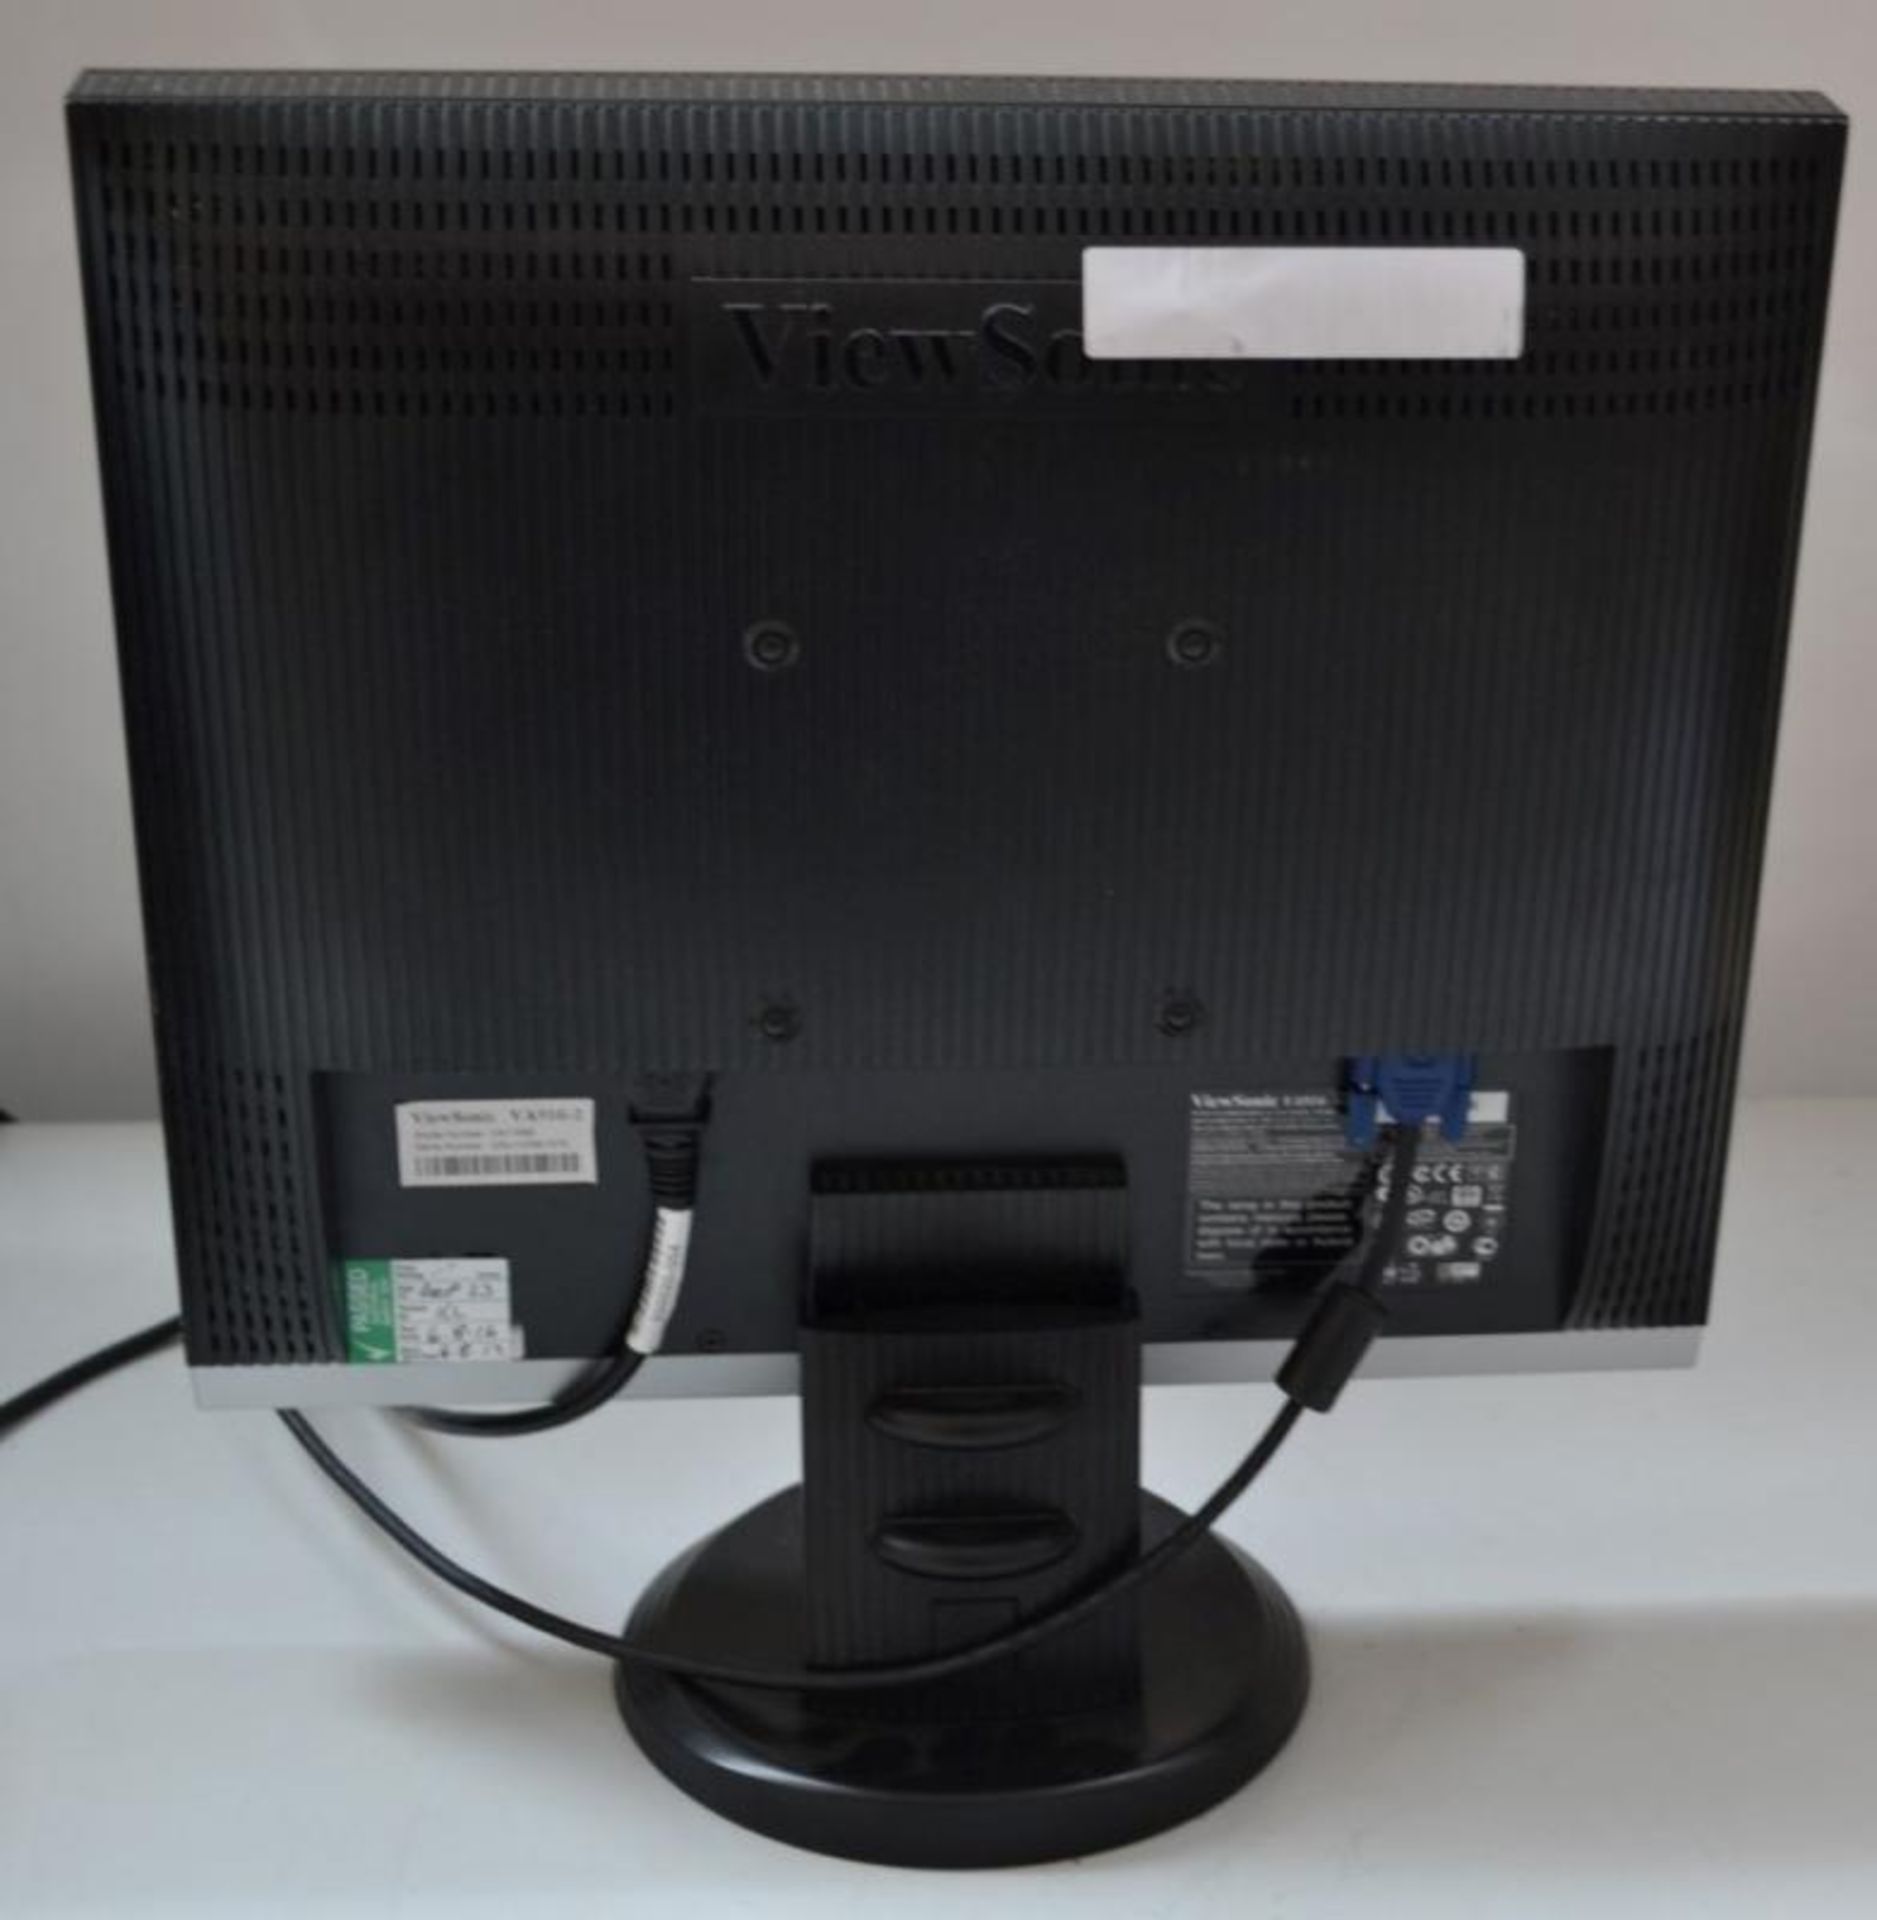 1 x ViewSonic VA916 19" LCD PC Monitor - Ref J2239 - CL394 - Location: Altrincham WA14 - HKPal2 - Image 2 of 3